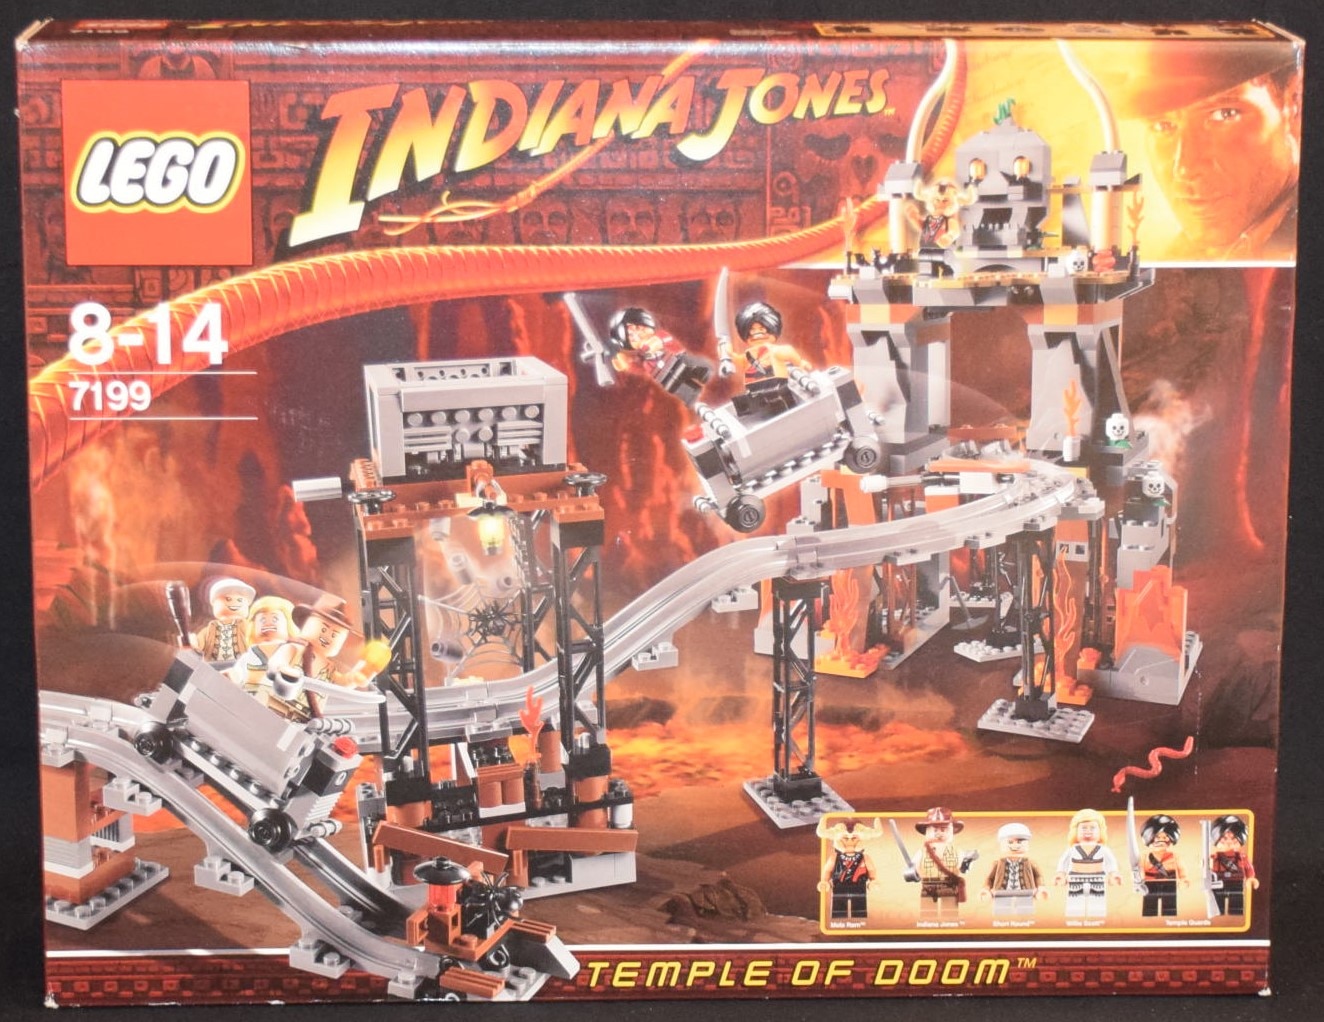 LEGO Indiana Jones The Temple of Doom 7199